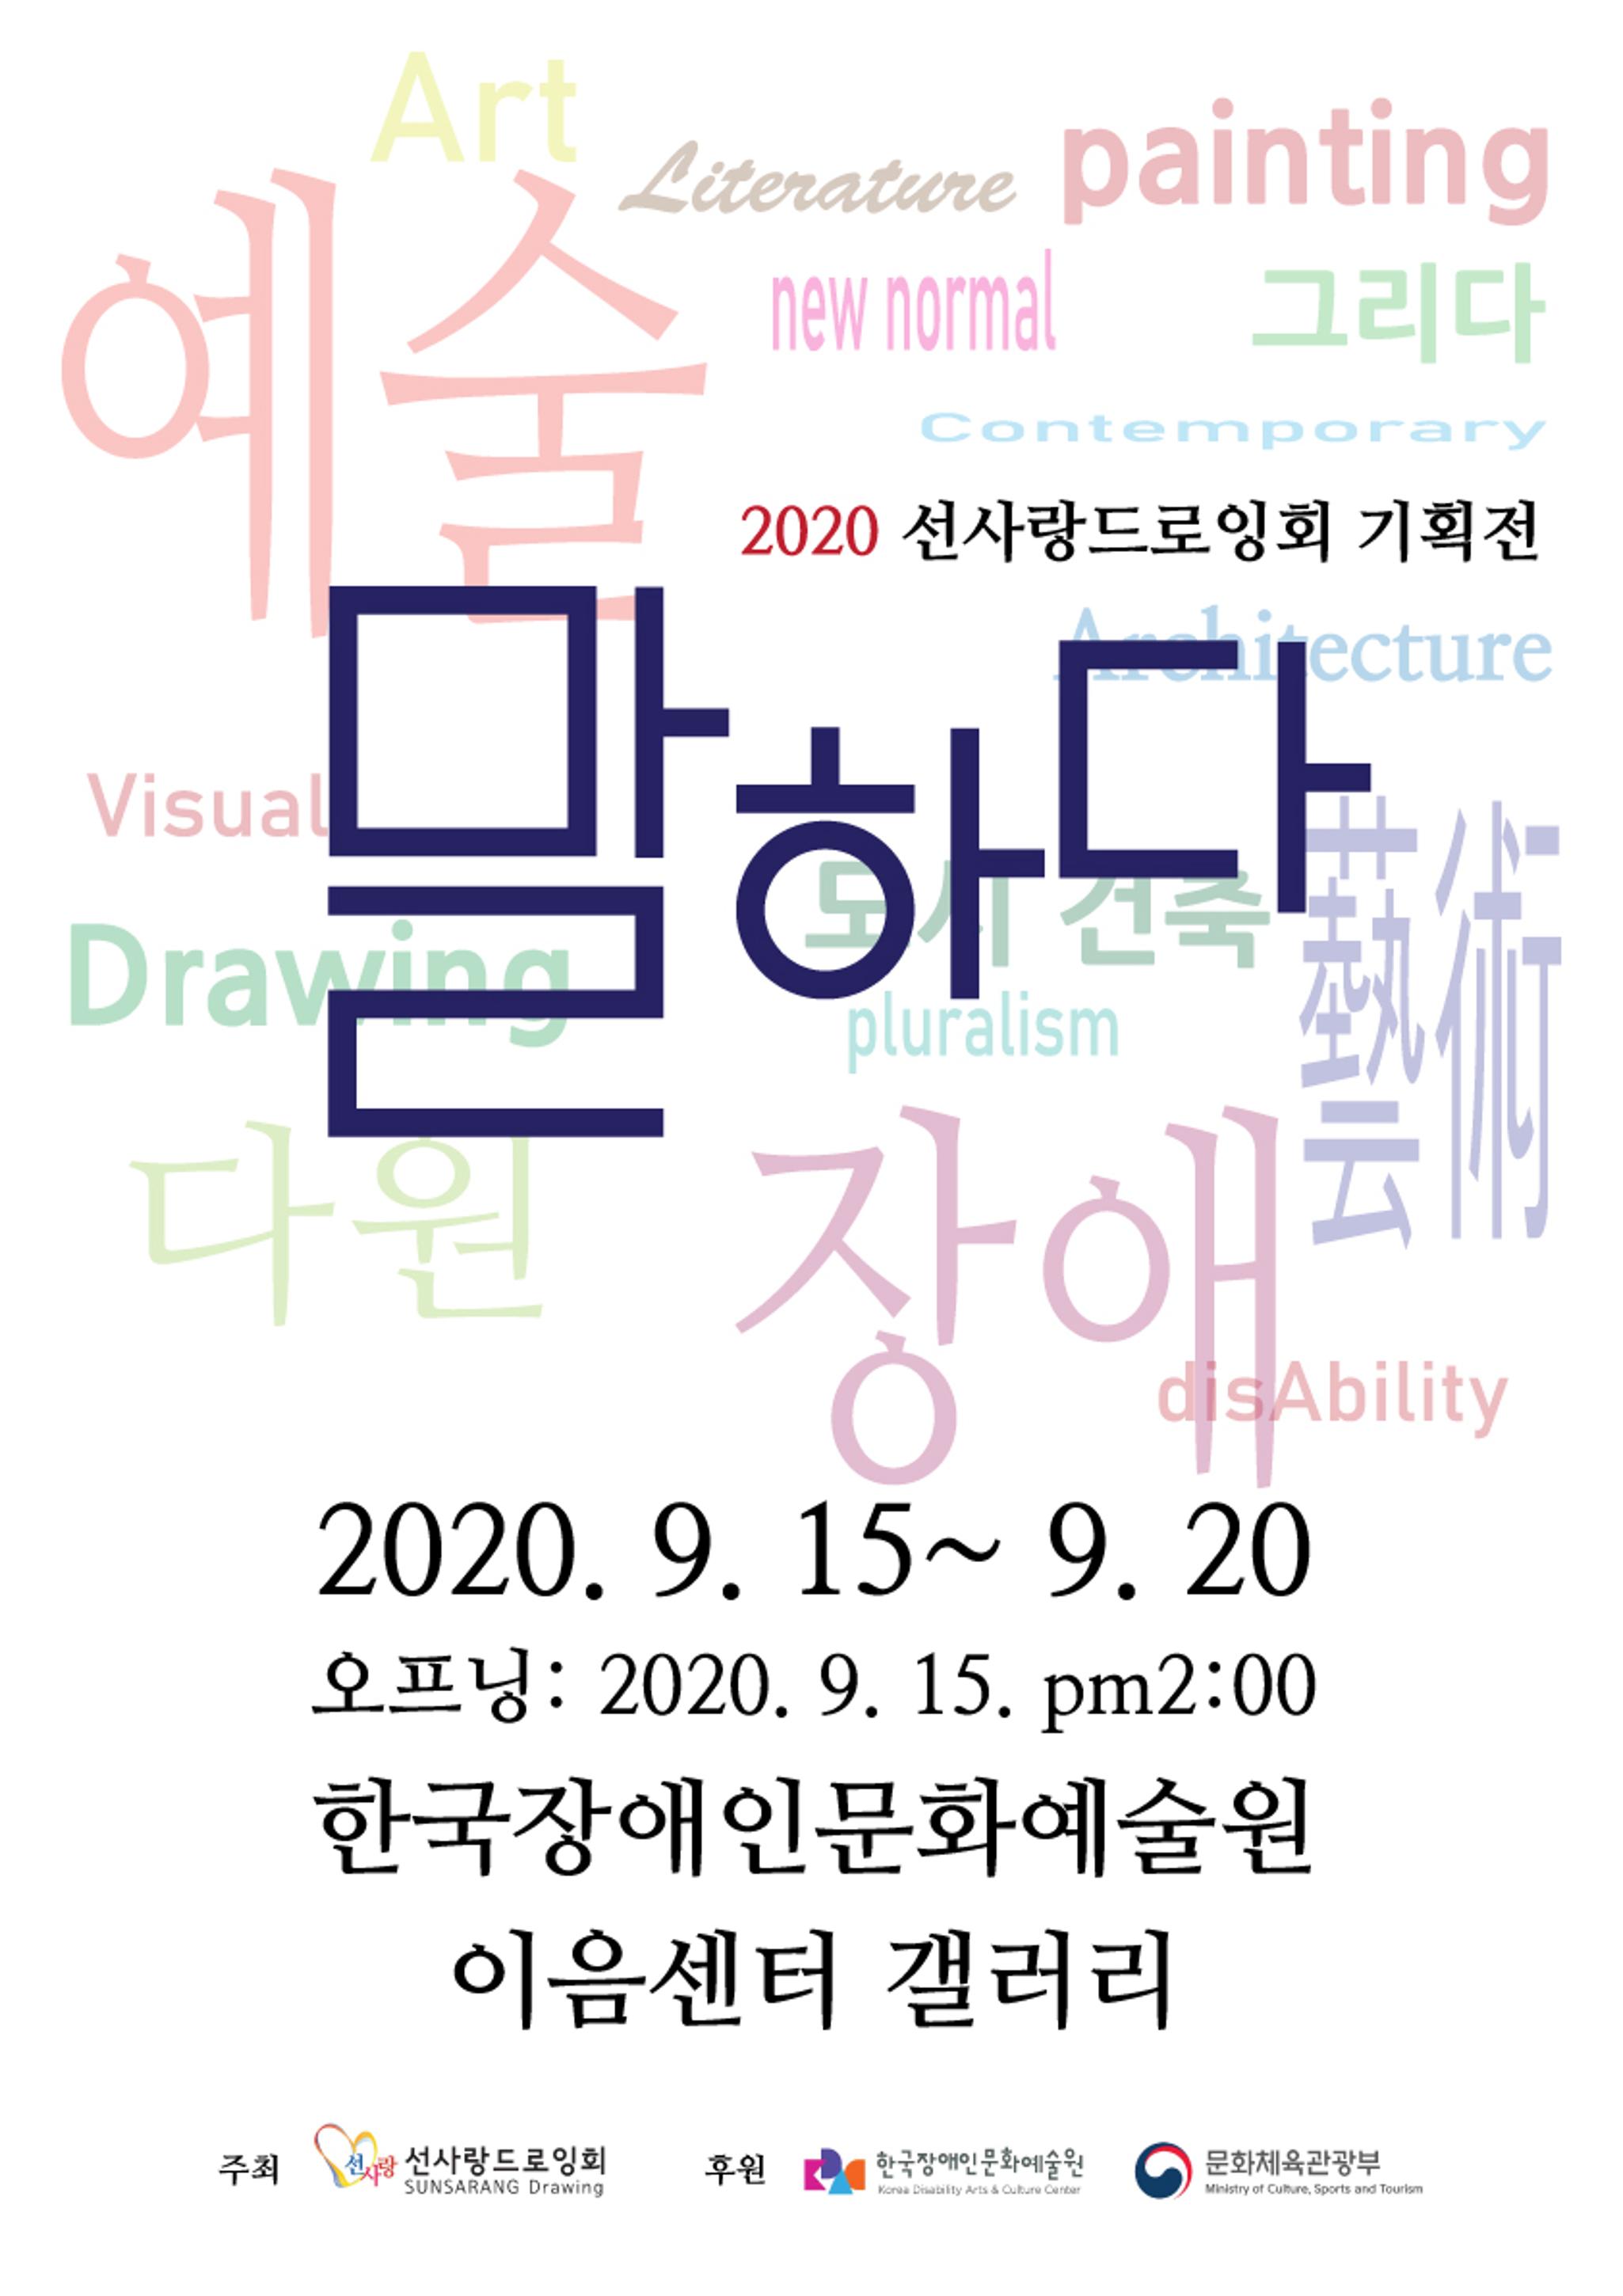 <p>2020 선사랑드로잉회 기획전</p>
<p>말하다</p>
<p>2020. 9. 15 ~ 9. 20</p>
<p>오프닝 : 2020. 9. 15. pm 2:00</p>
<p>한국장애인문화예술원 이음센터 갤러리</p>
<p>주최 : 선사랑드로잉회, 후원 : 한국장애인문화예술원, 문화체육관광부</p>